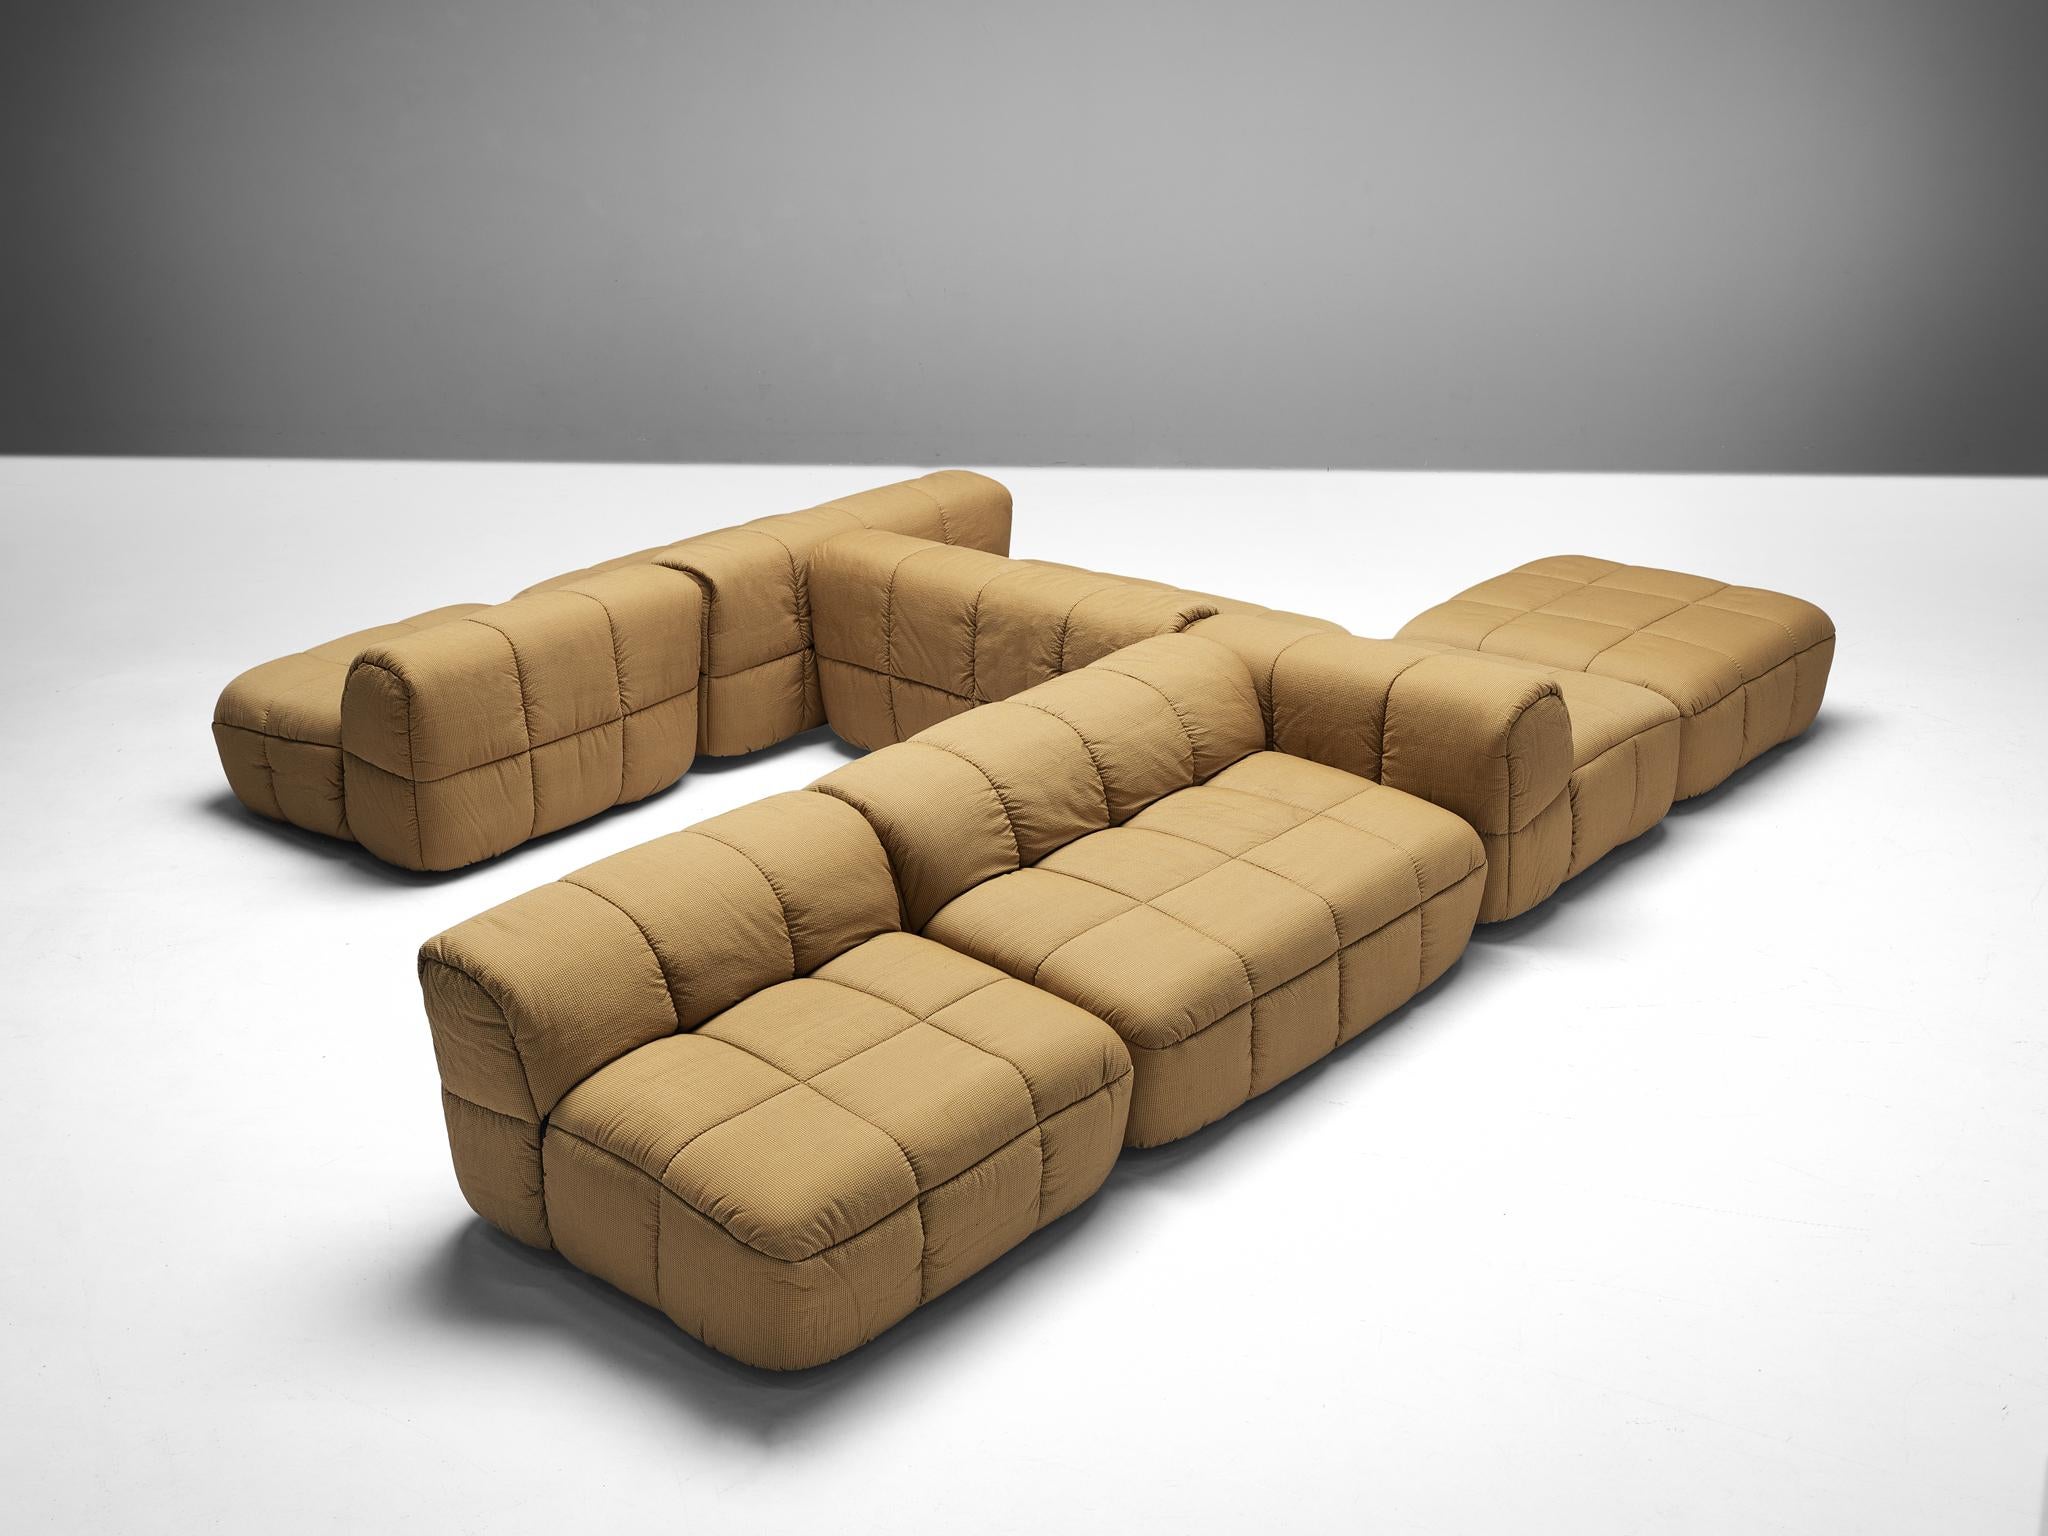 Cini Boeri for Arflex Modular 'Strips' Sofa 1